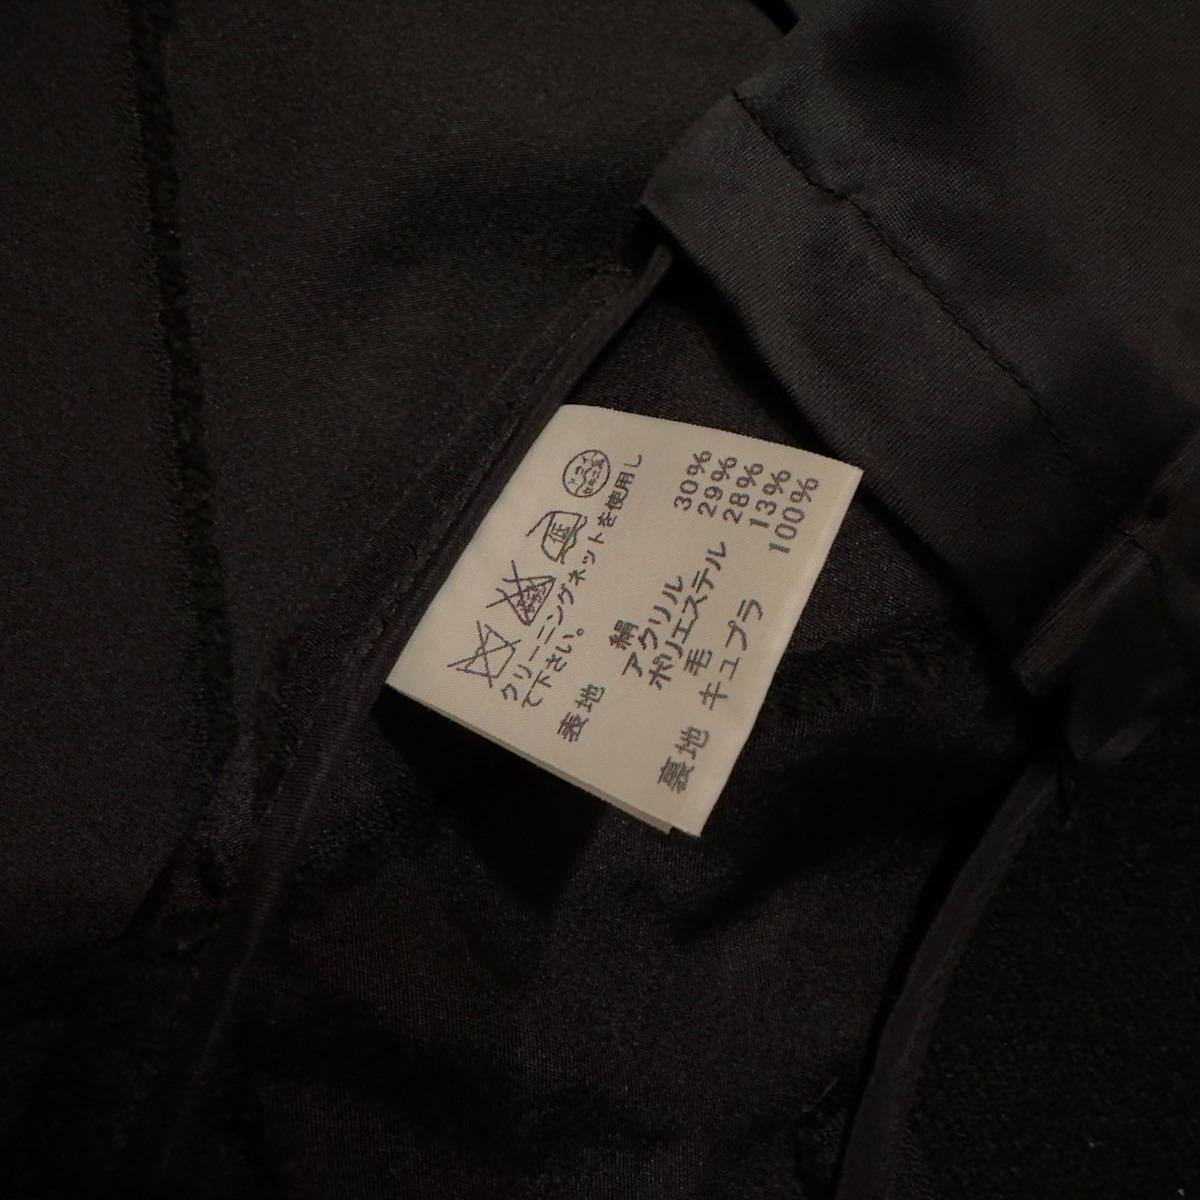 Rare 01AW ISSEY MIYAKE geometry switching tailored jacket archive comme des garcons yohji yamamoto rei kawakubo japanese label_画像4